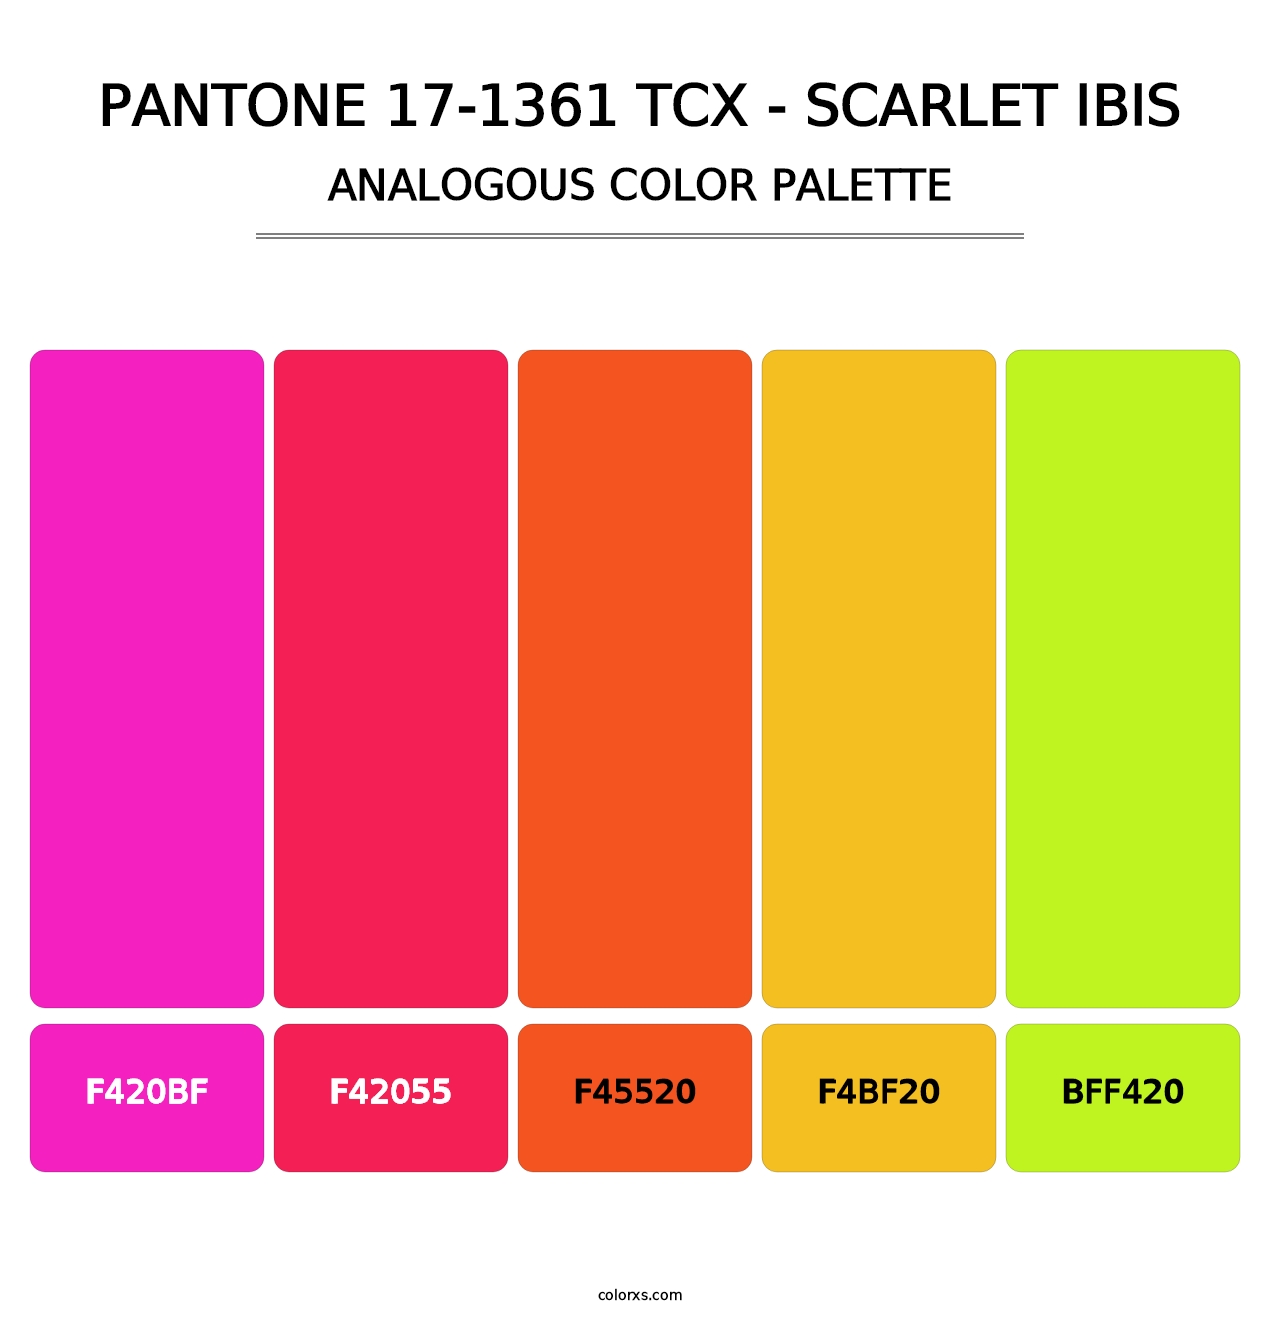 PANTONE 17-1361 TCX - Scarlet Ibis - Analogous Color Palette